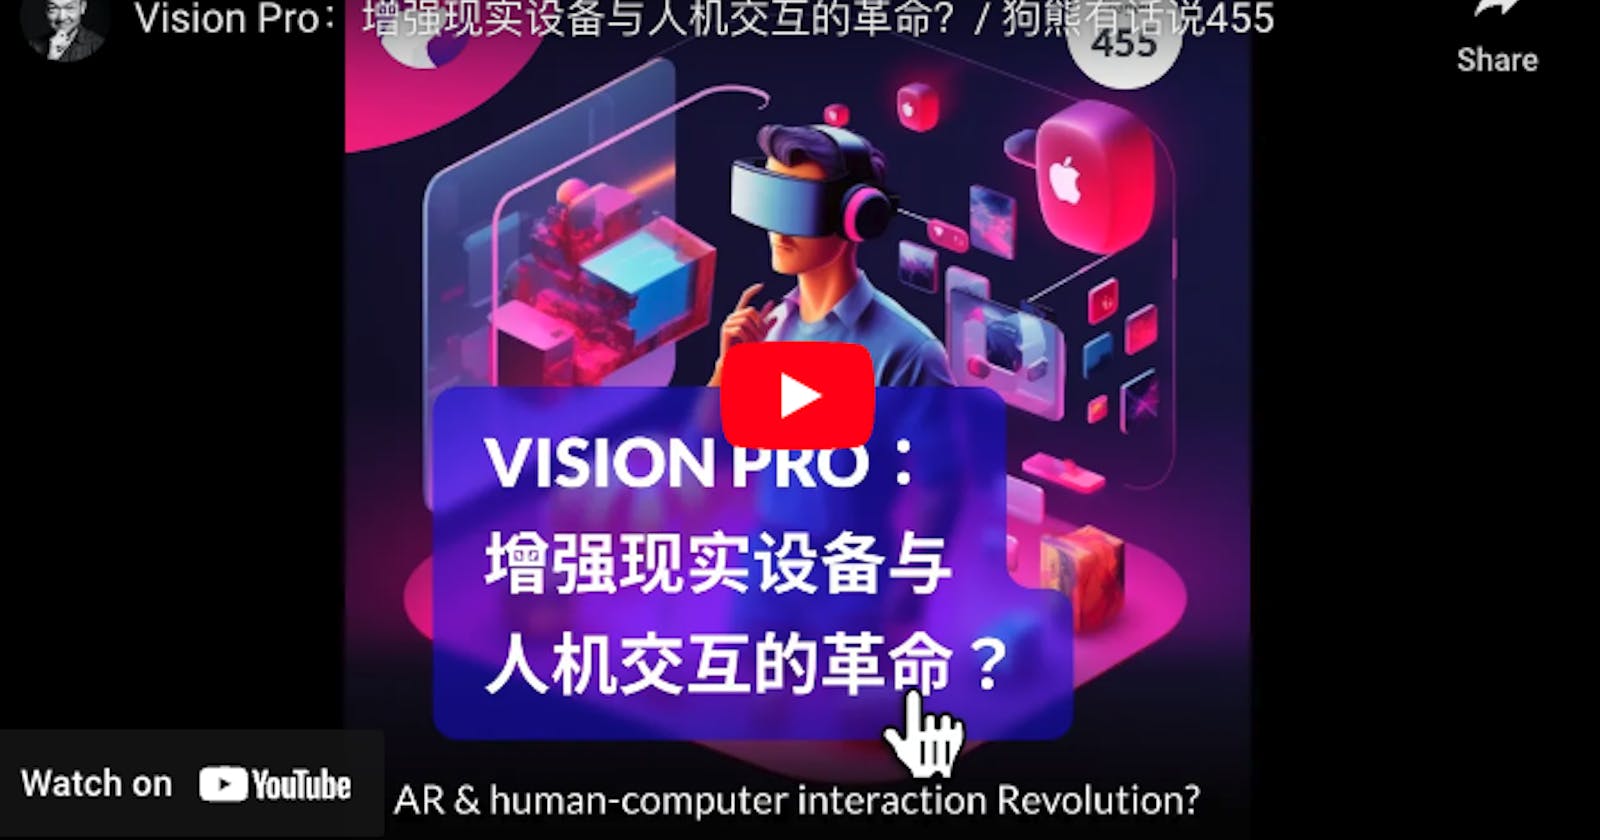 Vision Pro：增强现实设备与人机交互的革命？- 狗熊有话说455